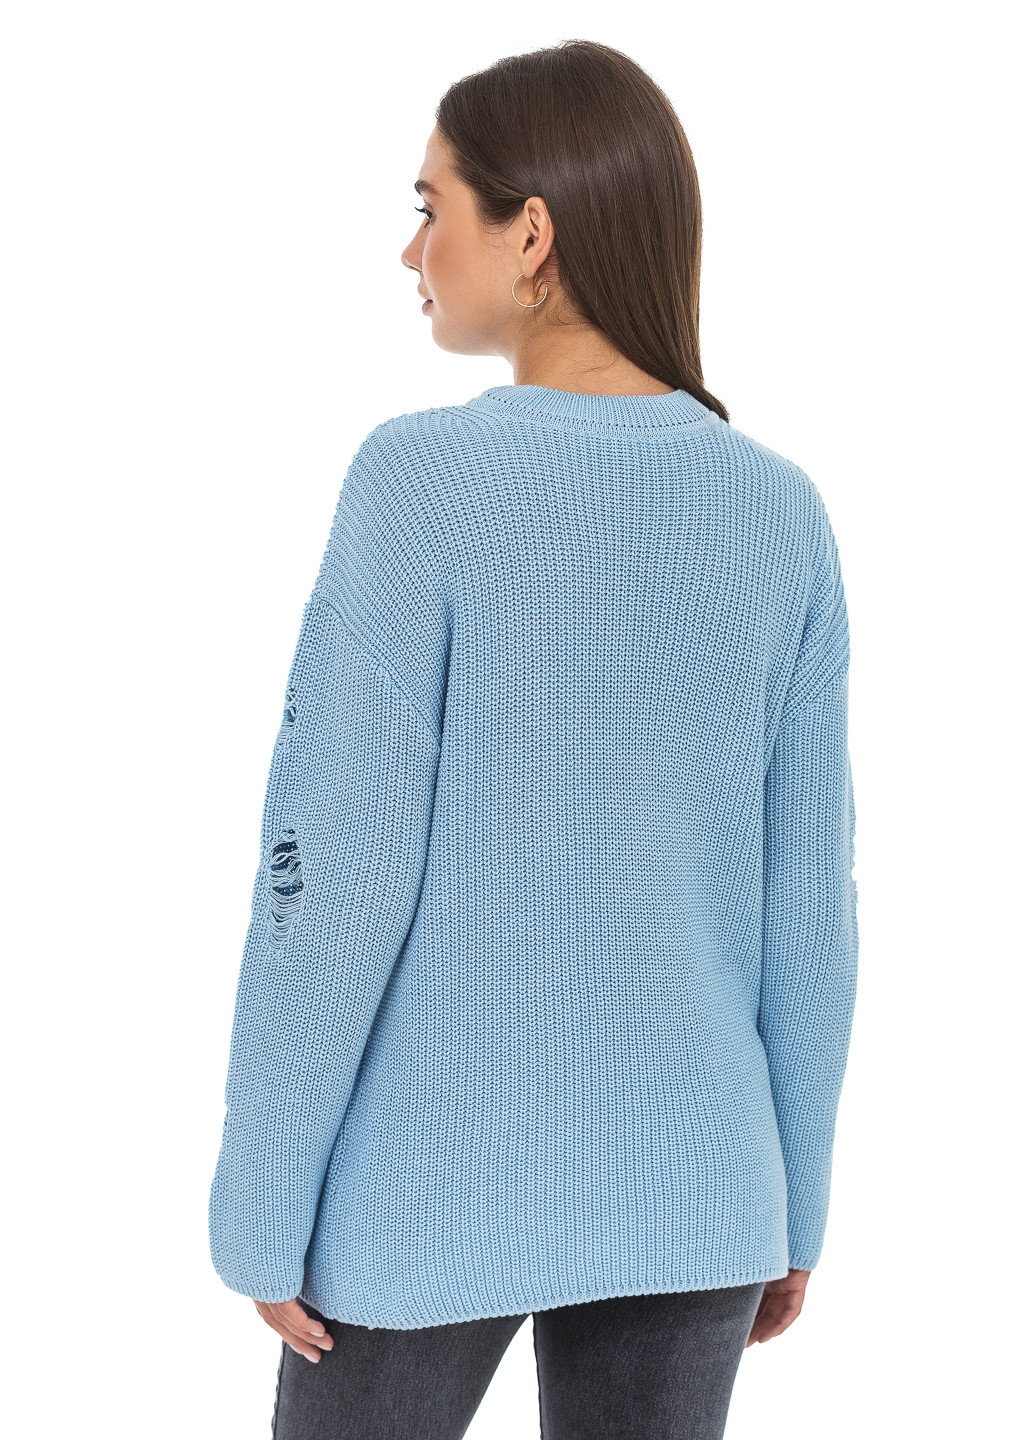 Голубой женский свитер с дырками. SVTR